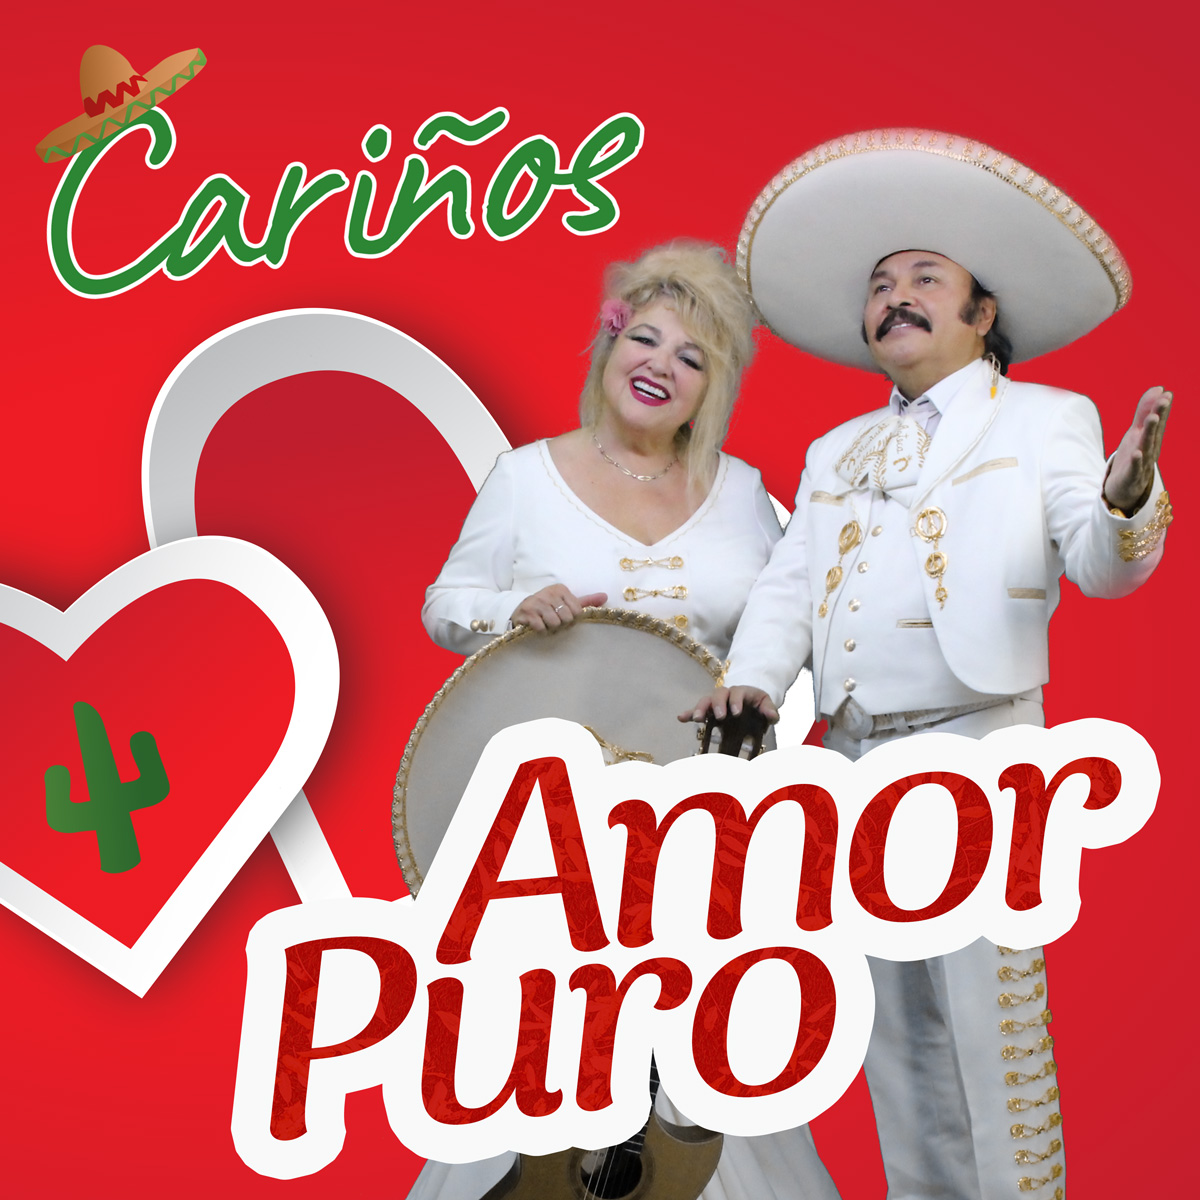 Carinos - Amor Puro (Mariachi-Schlager Musikvideo)